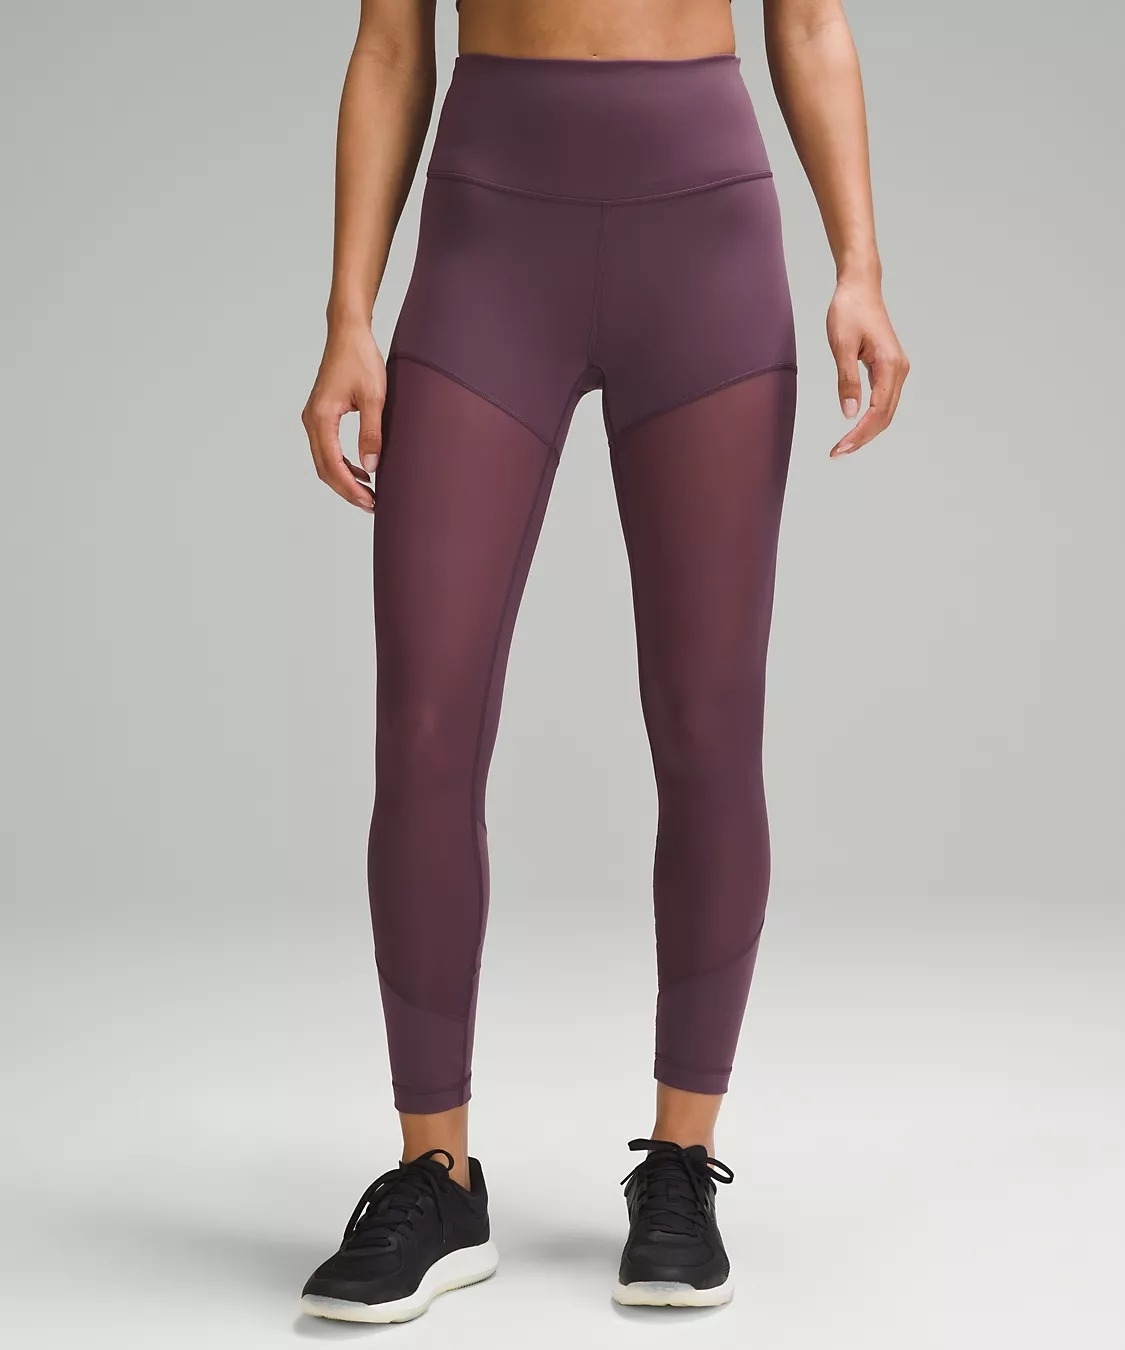 Model wearing dark purple mesh ankle-length leggings